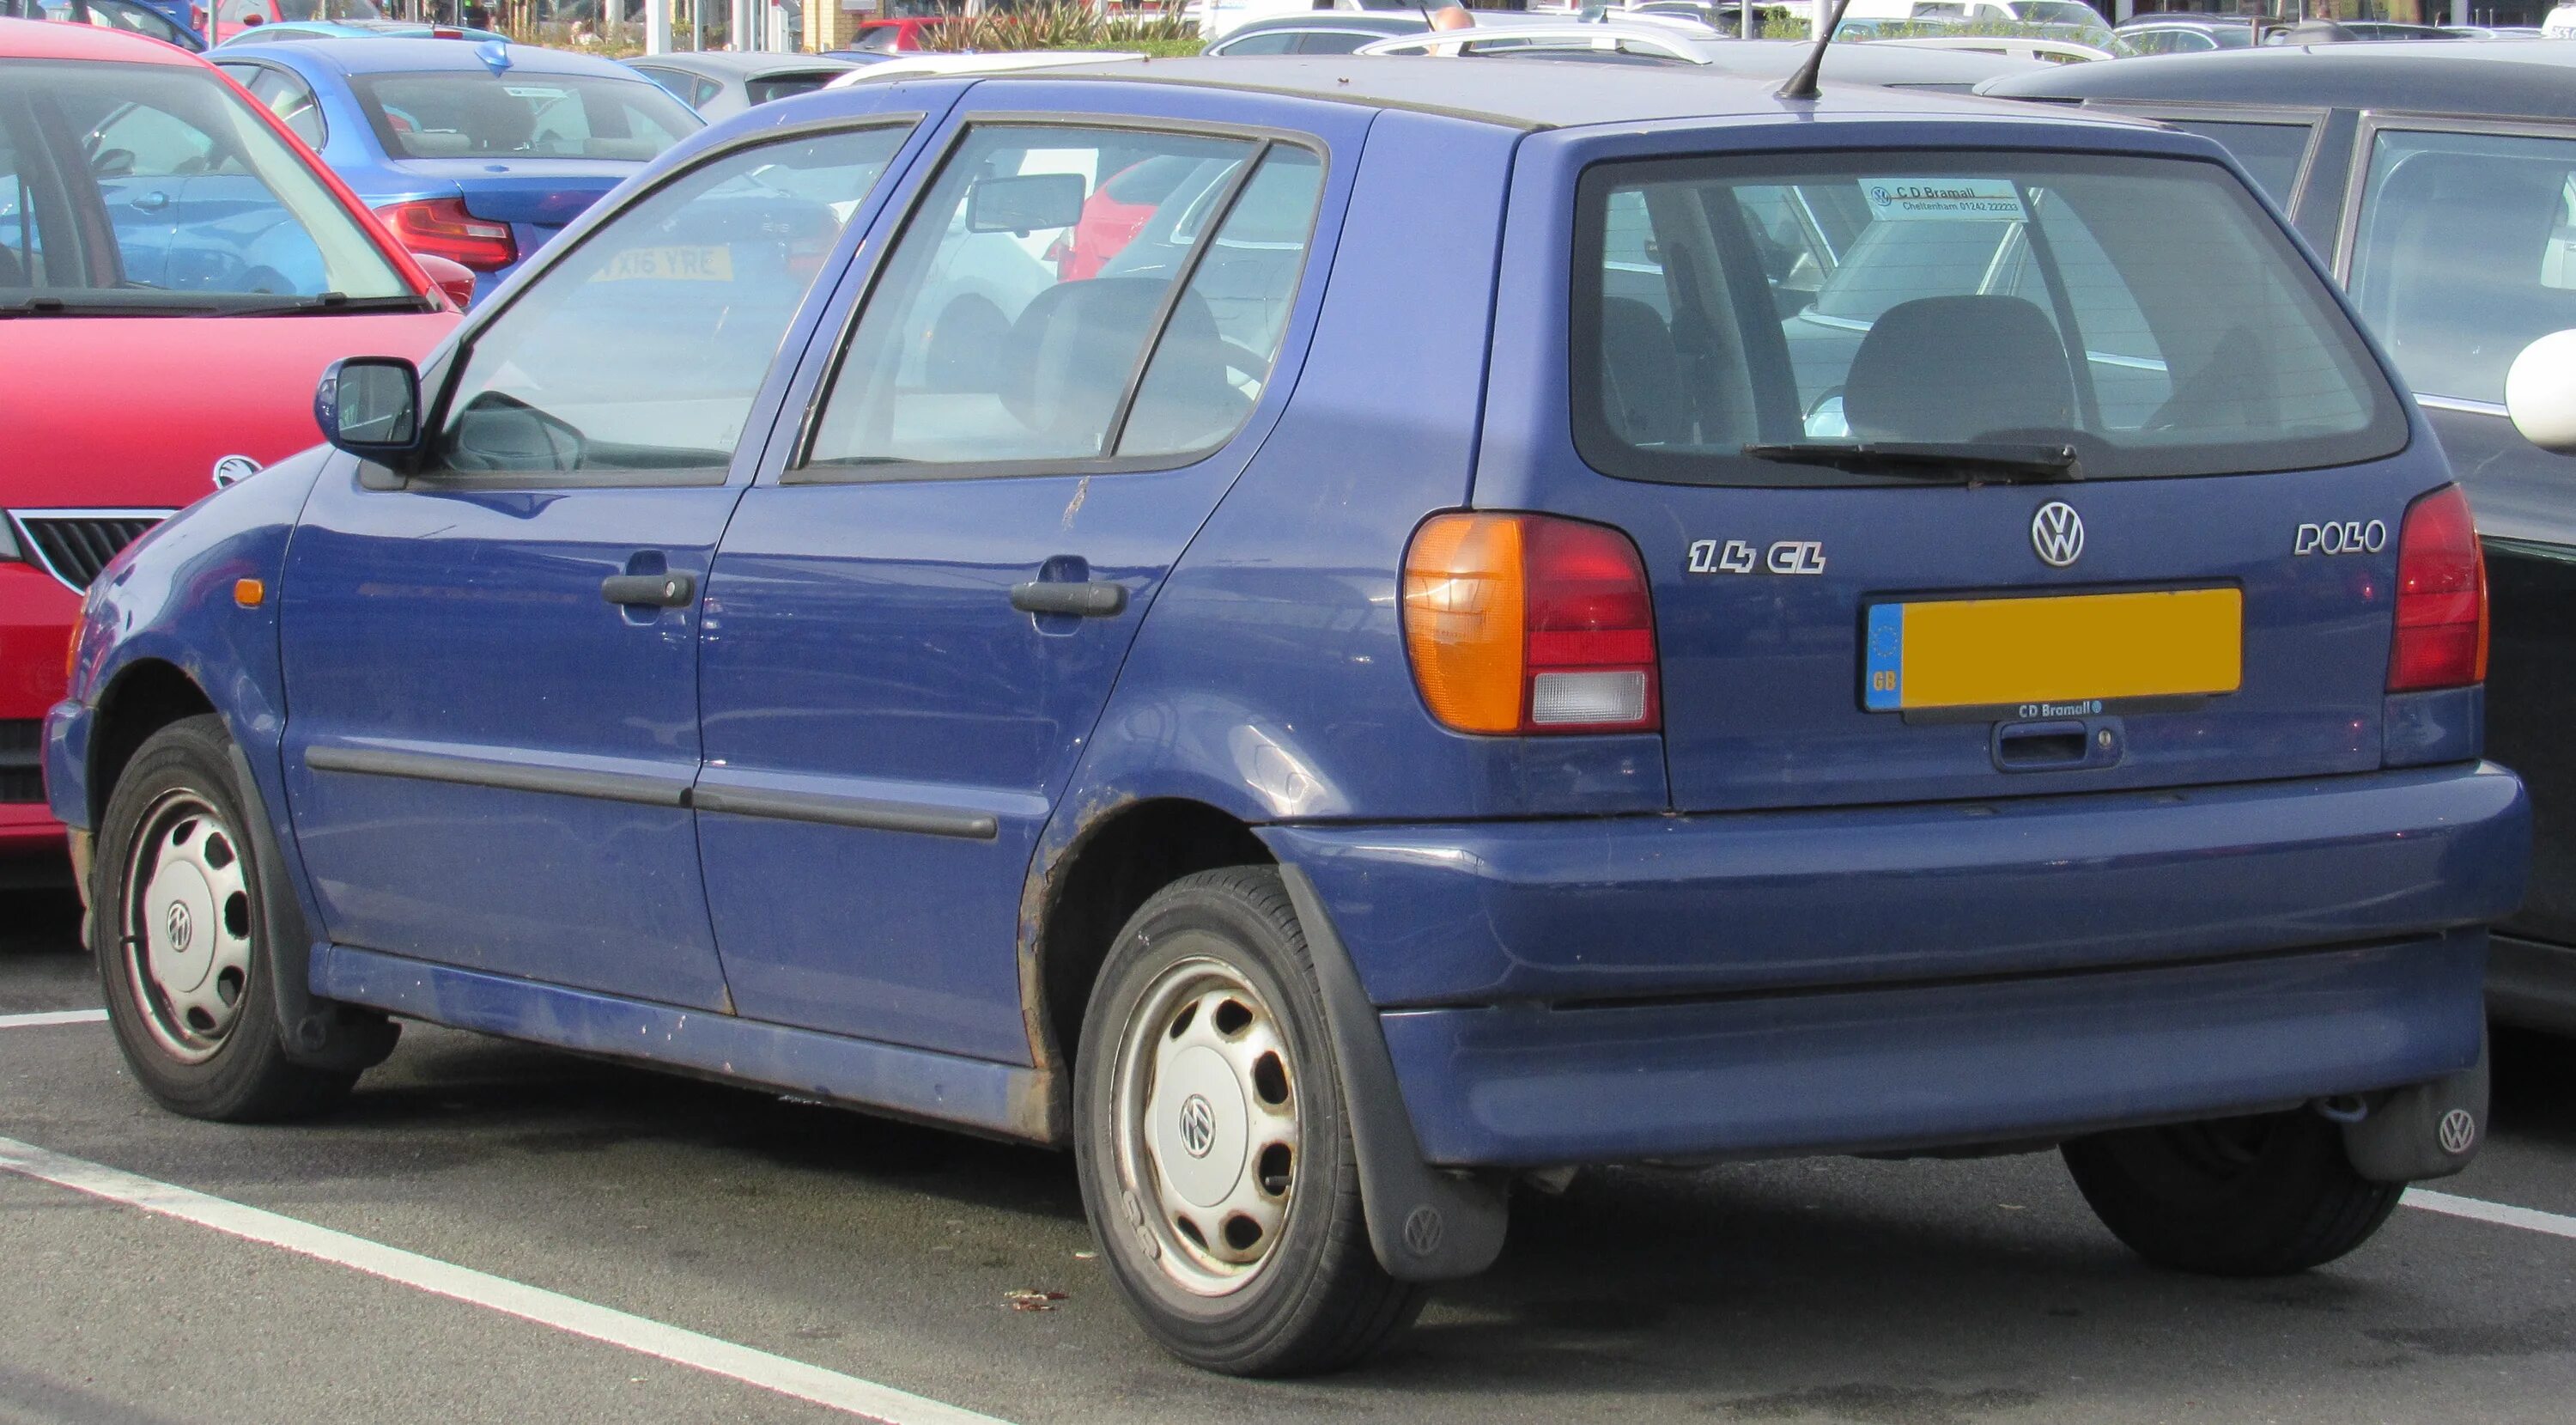 VW Polo 1997. Фольксваген поло 1997 хэтчбек. Polo Classic 1997. Фольксваген поло мк3. Поло 1997 года